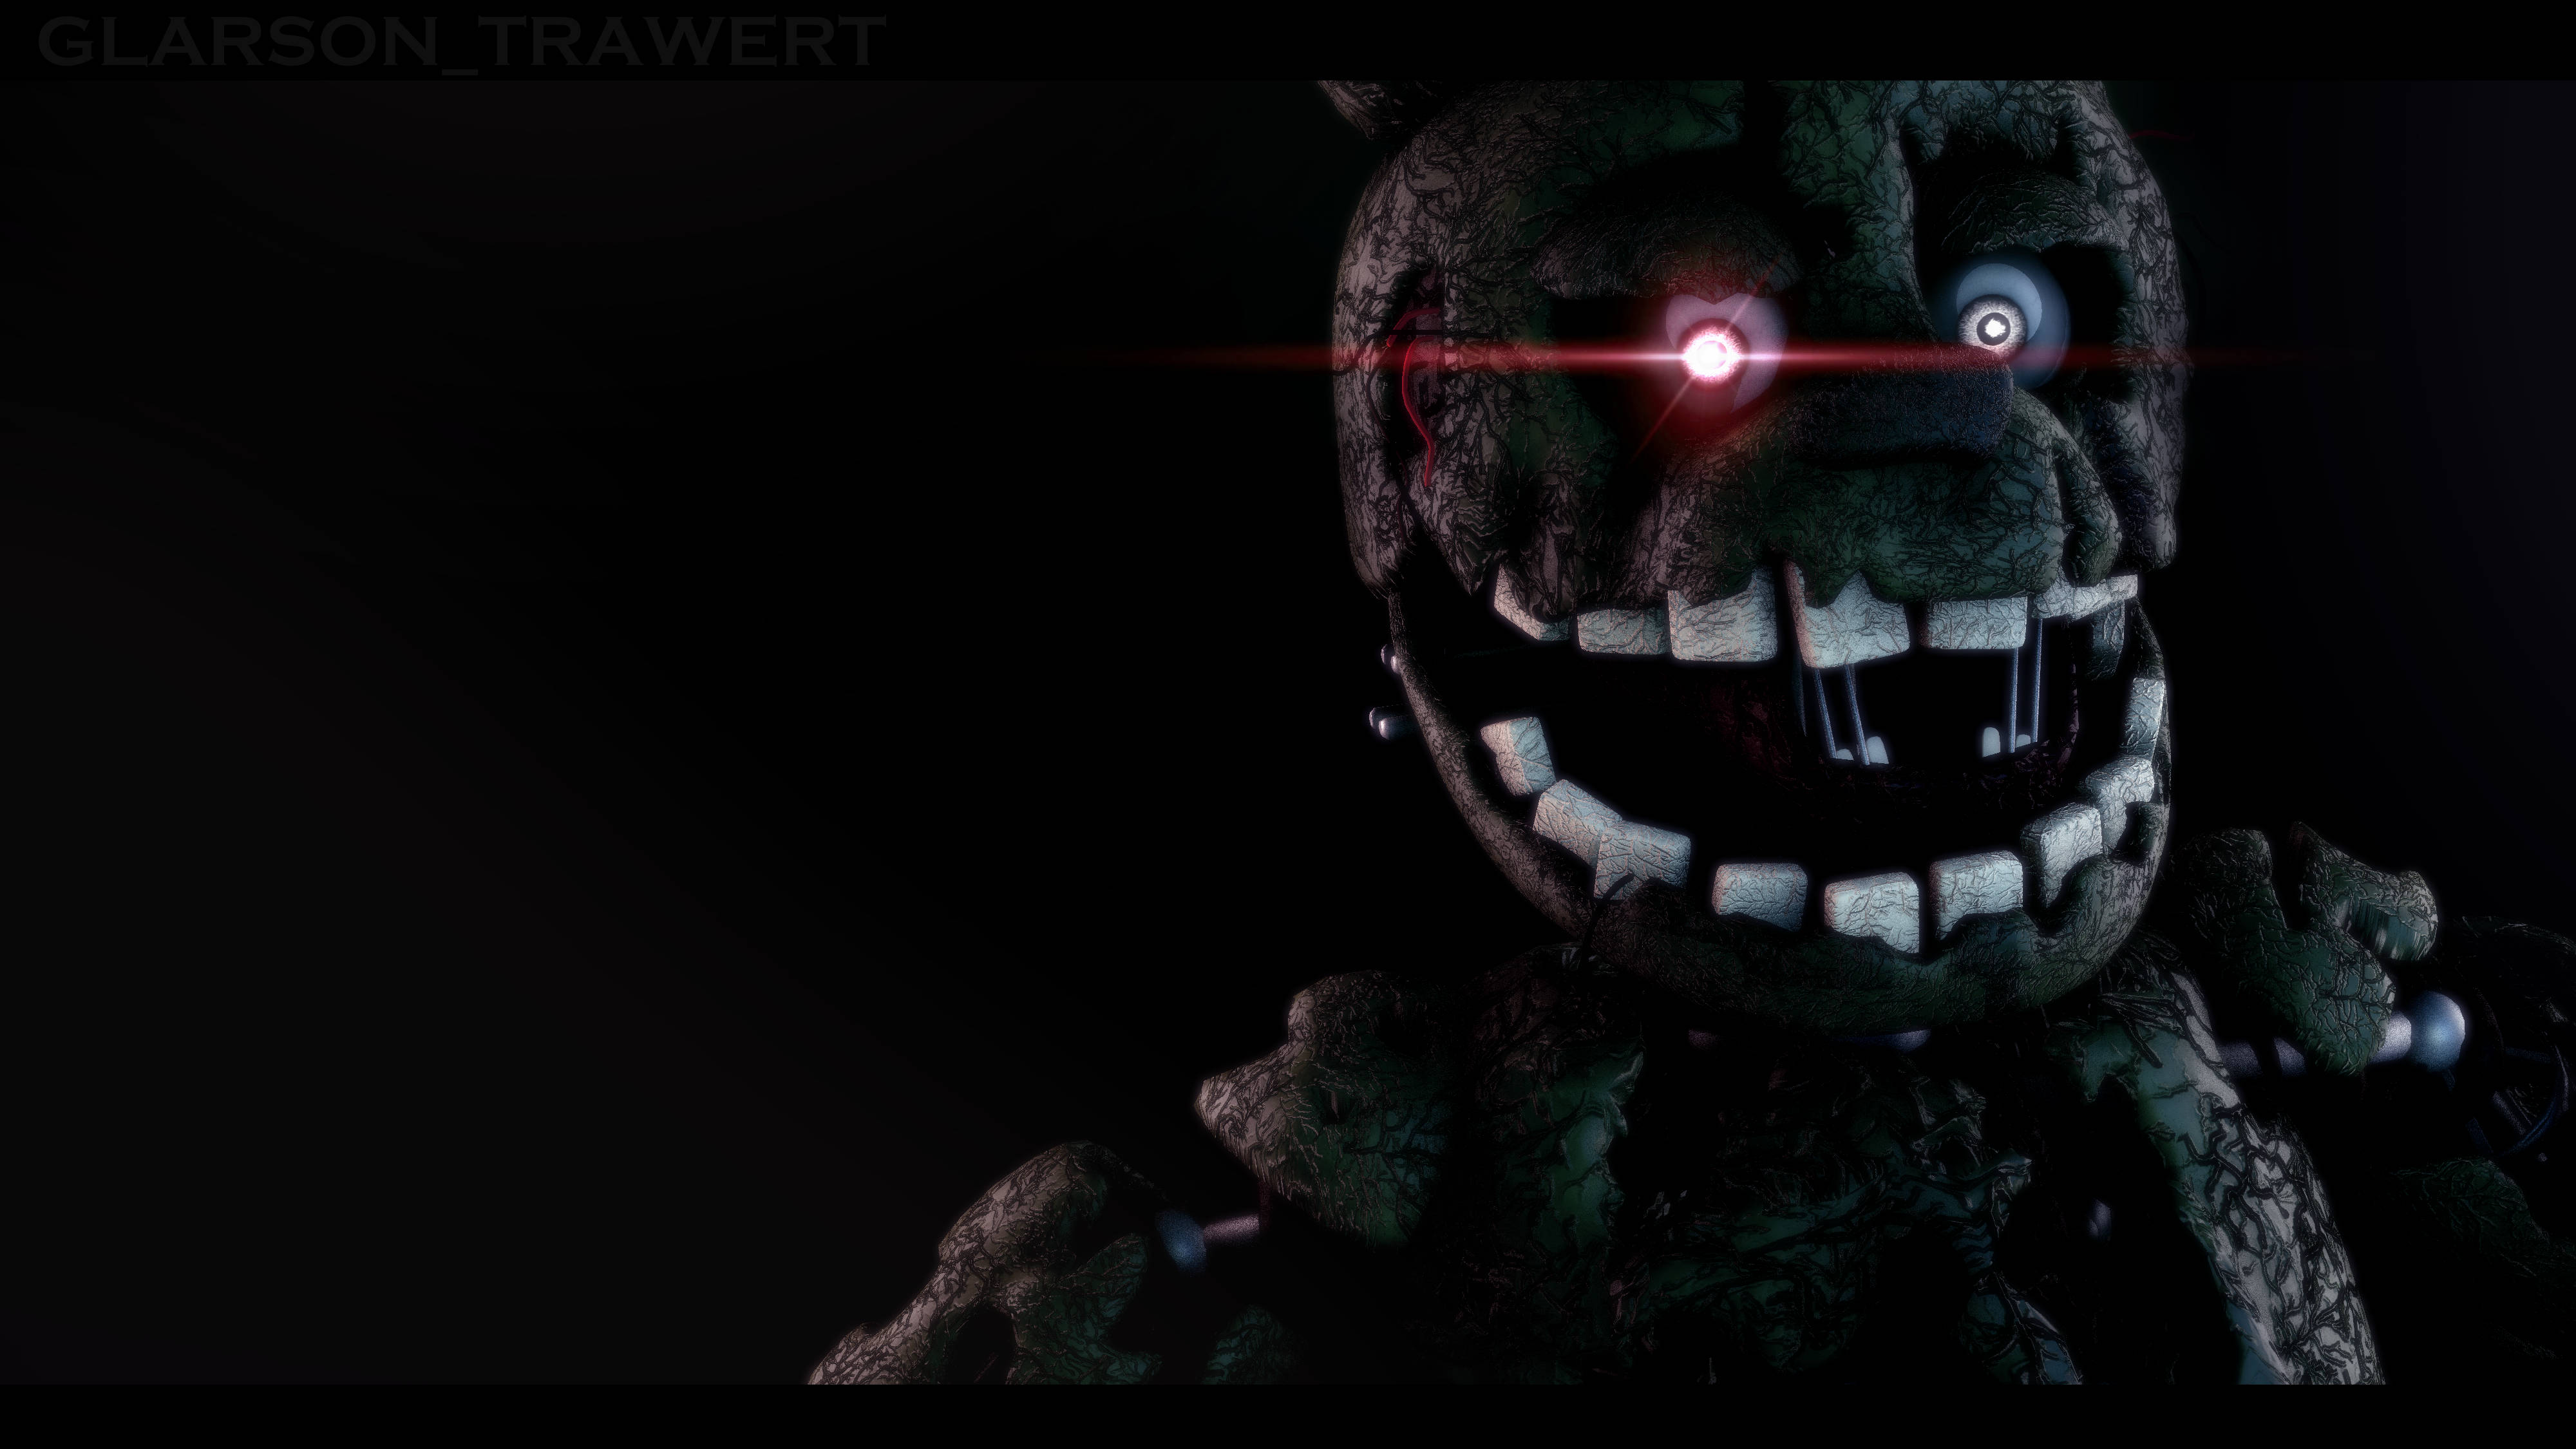 Five Nights at Freddy's - FNAF 4 - Phantom Puppet - It's Me | Magnet